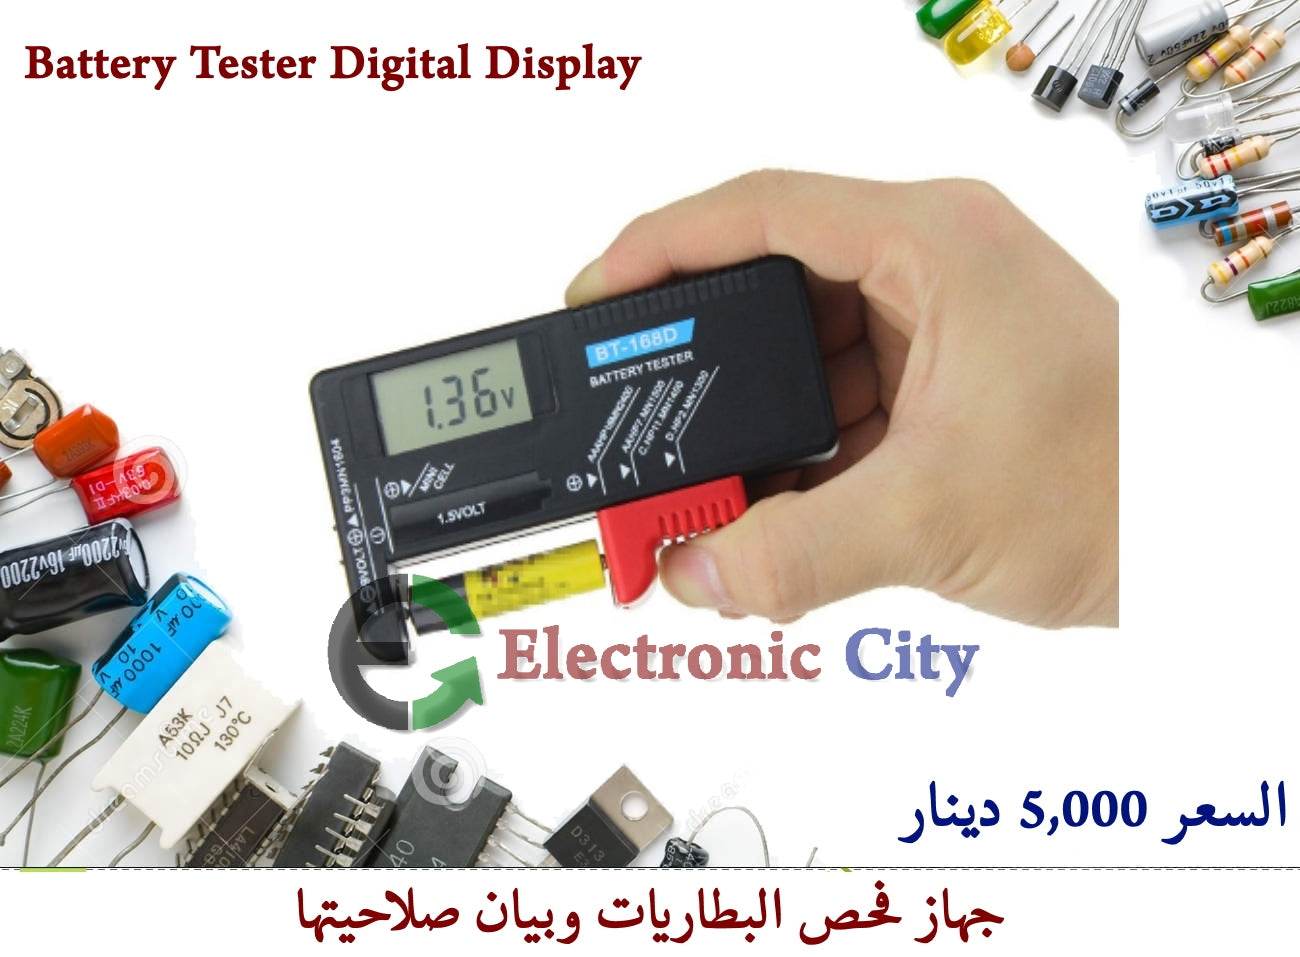 Battery Tester Digital Display #R4 X-CX0087A